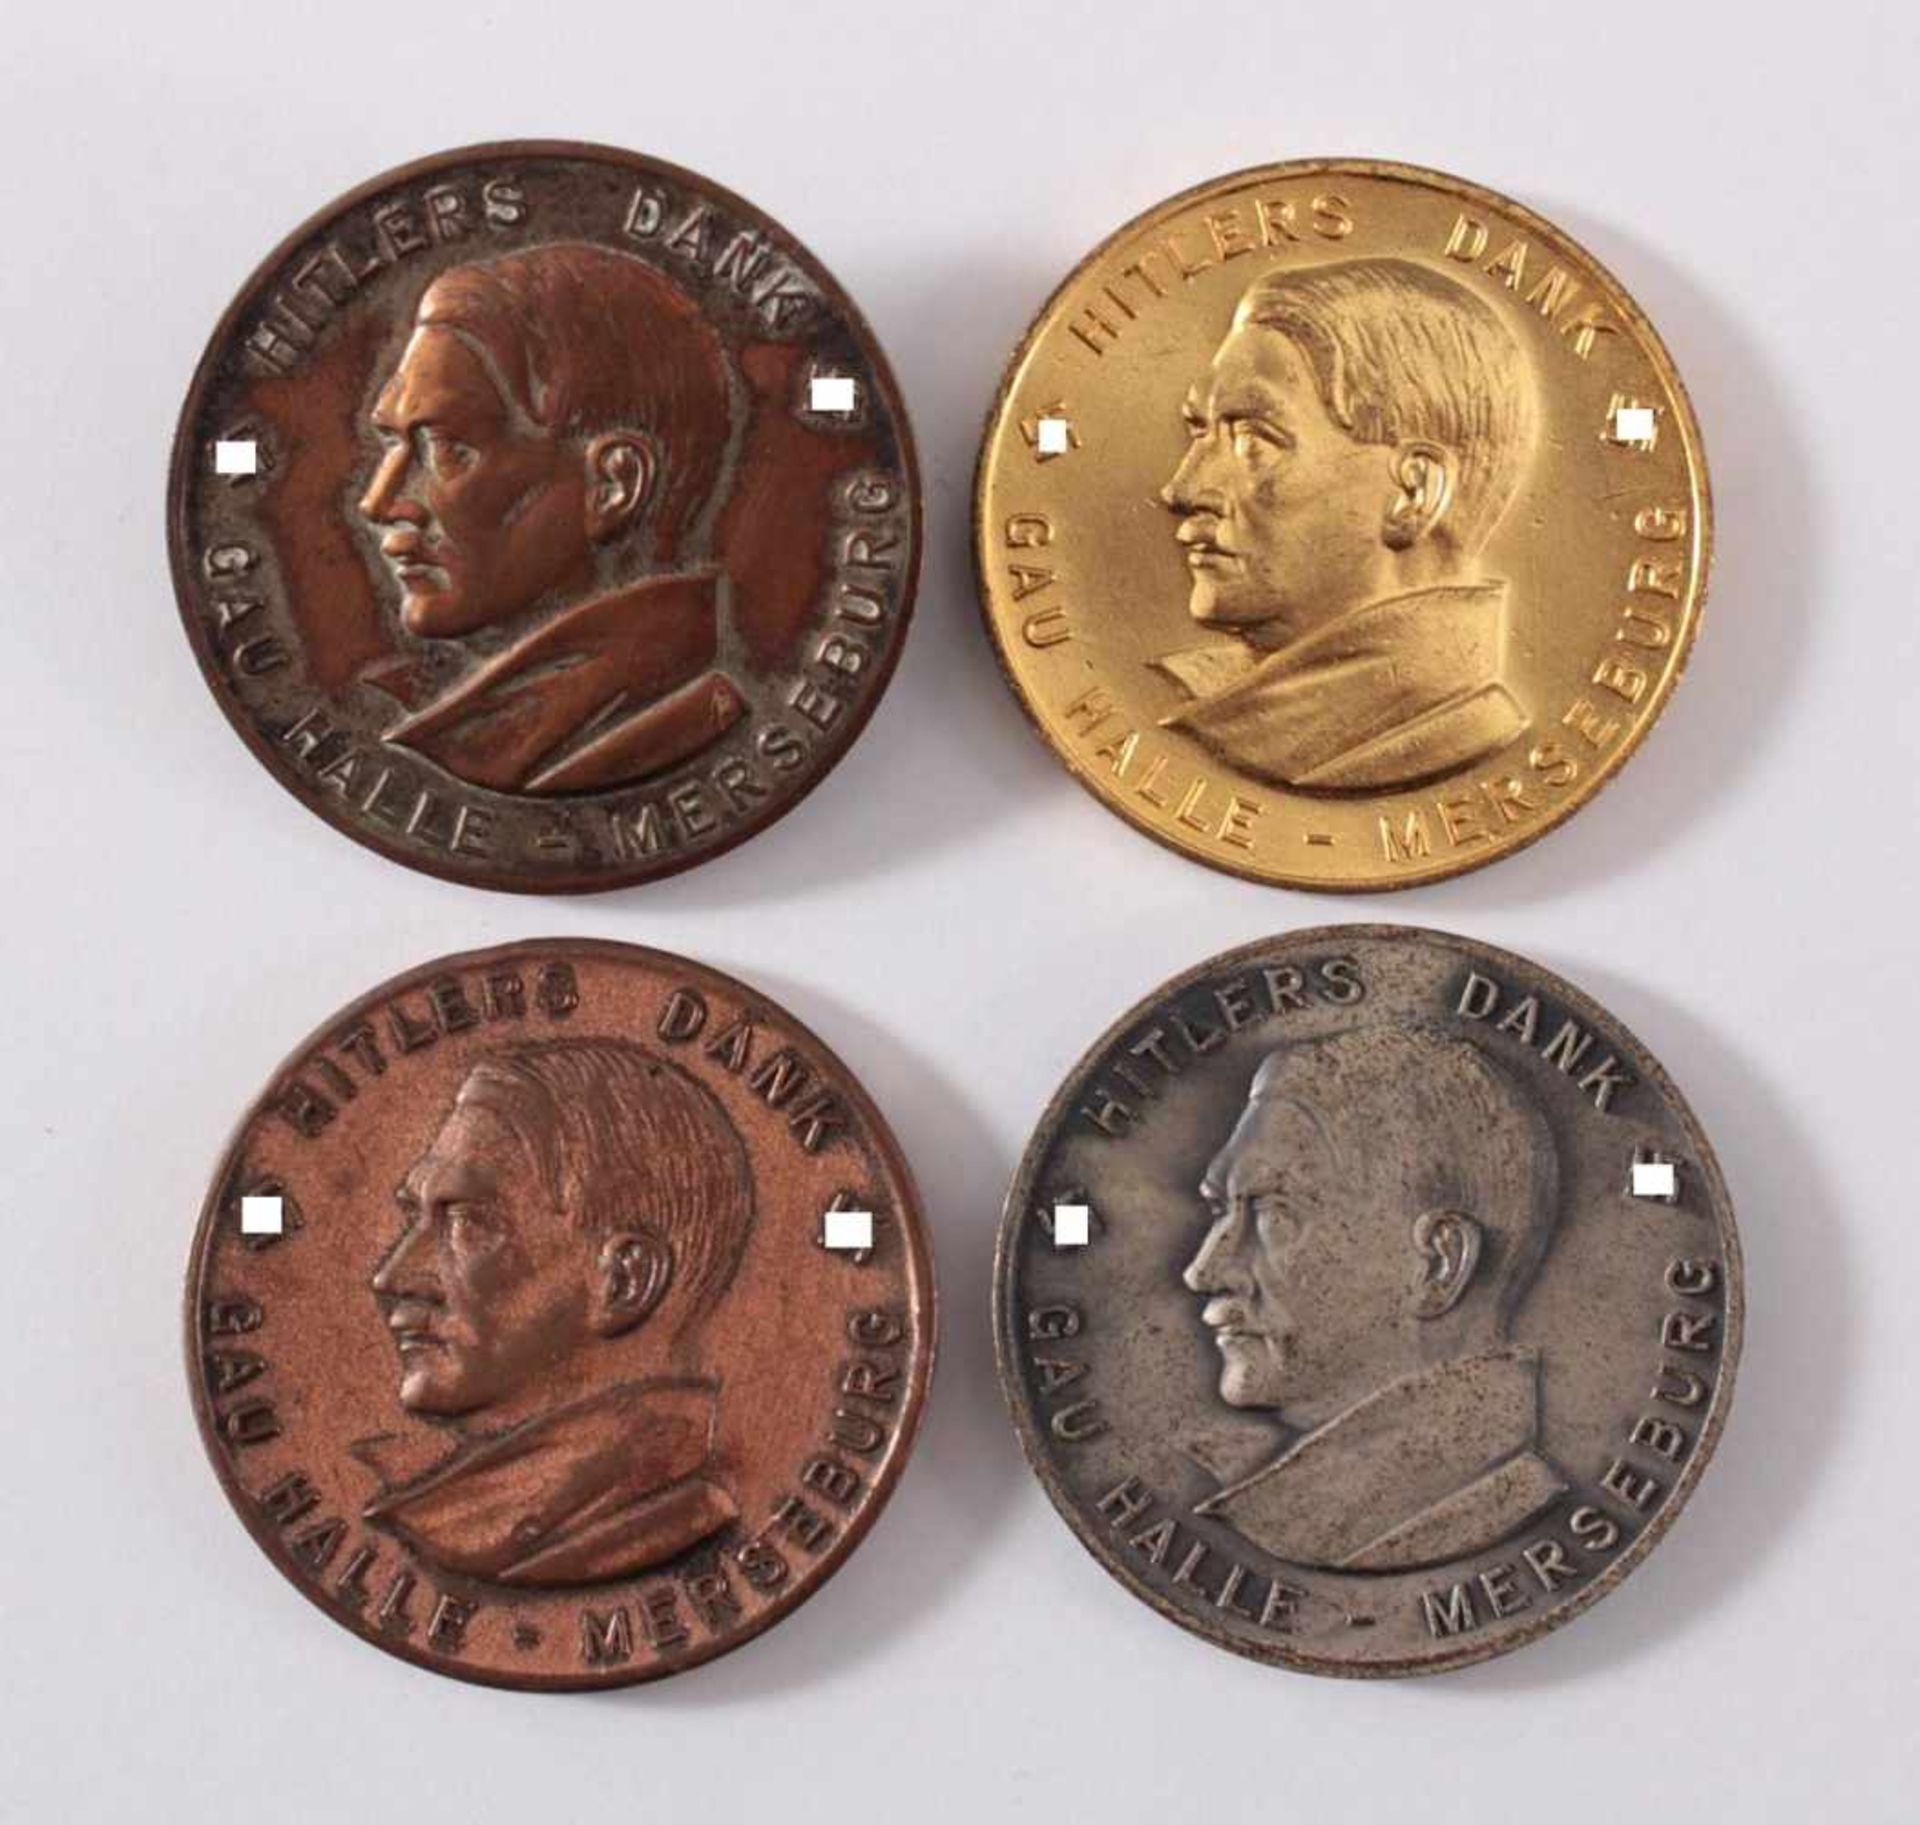 4 Medaillen Hitlers Dank - Gau Halle-MeerseburgBuntmetall, 1x silbern, 2x kupfern, 1x goldfarben.